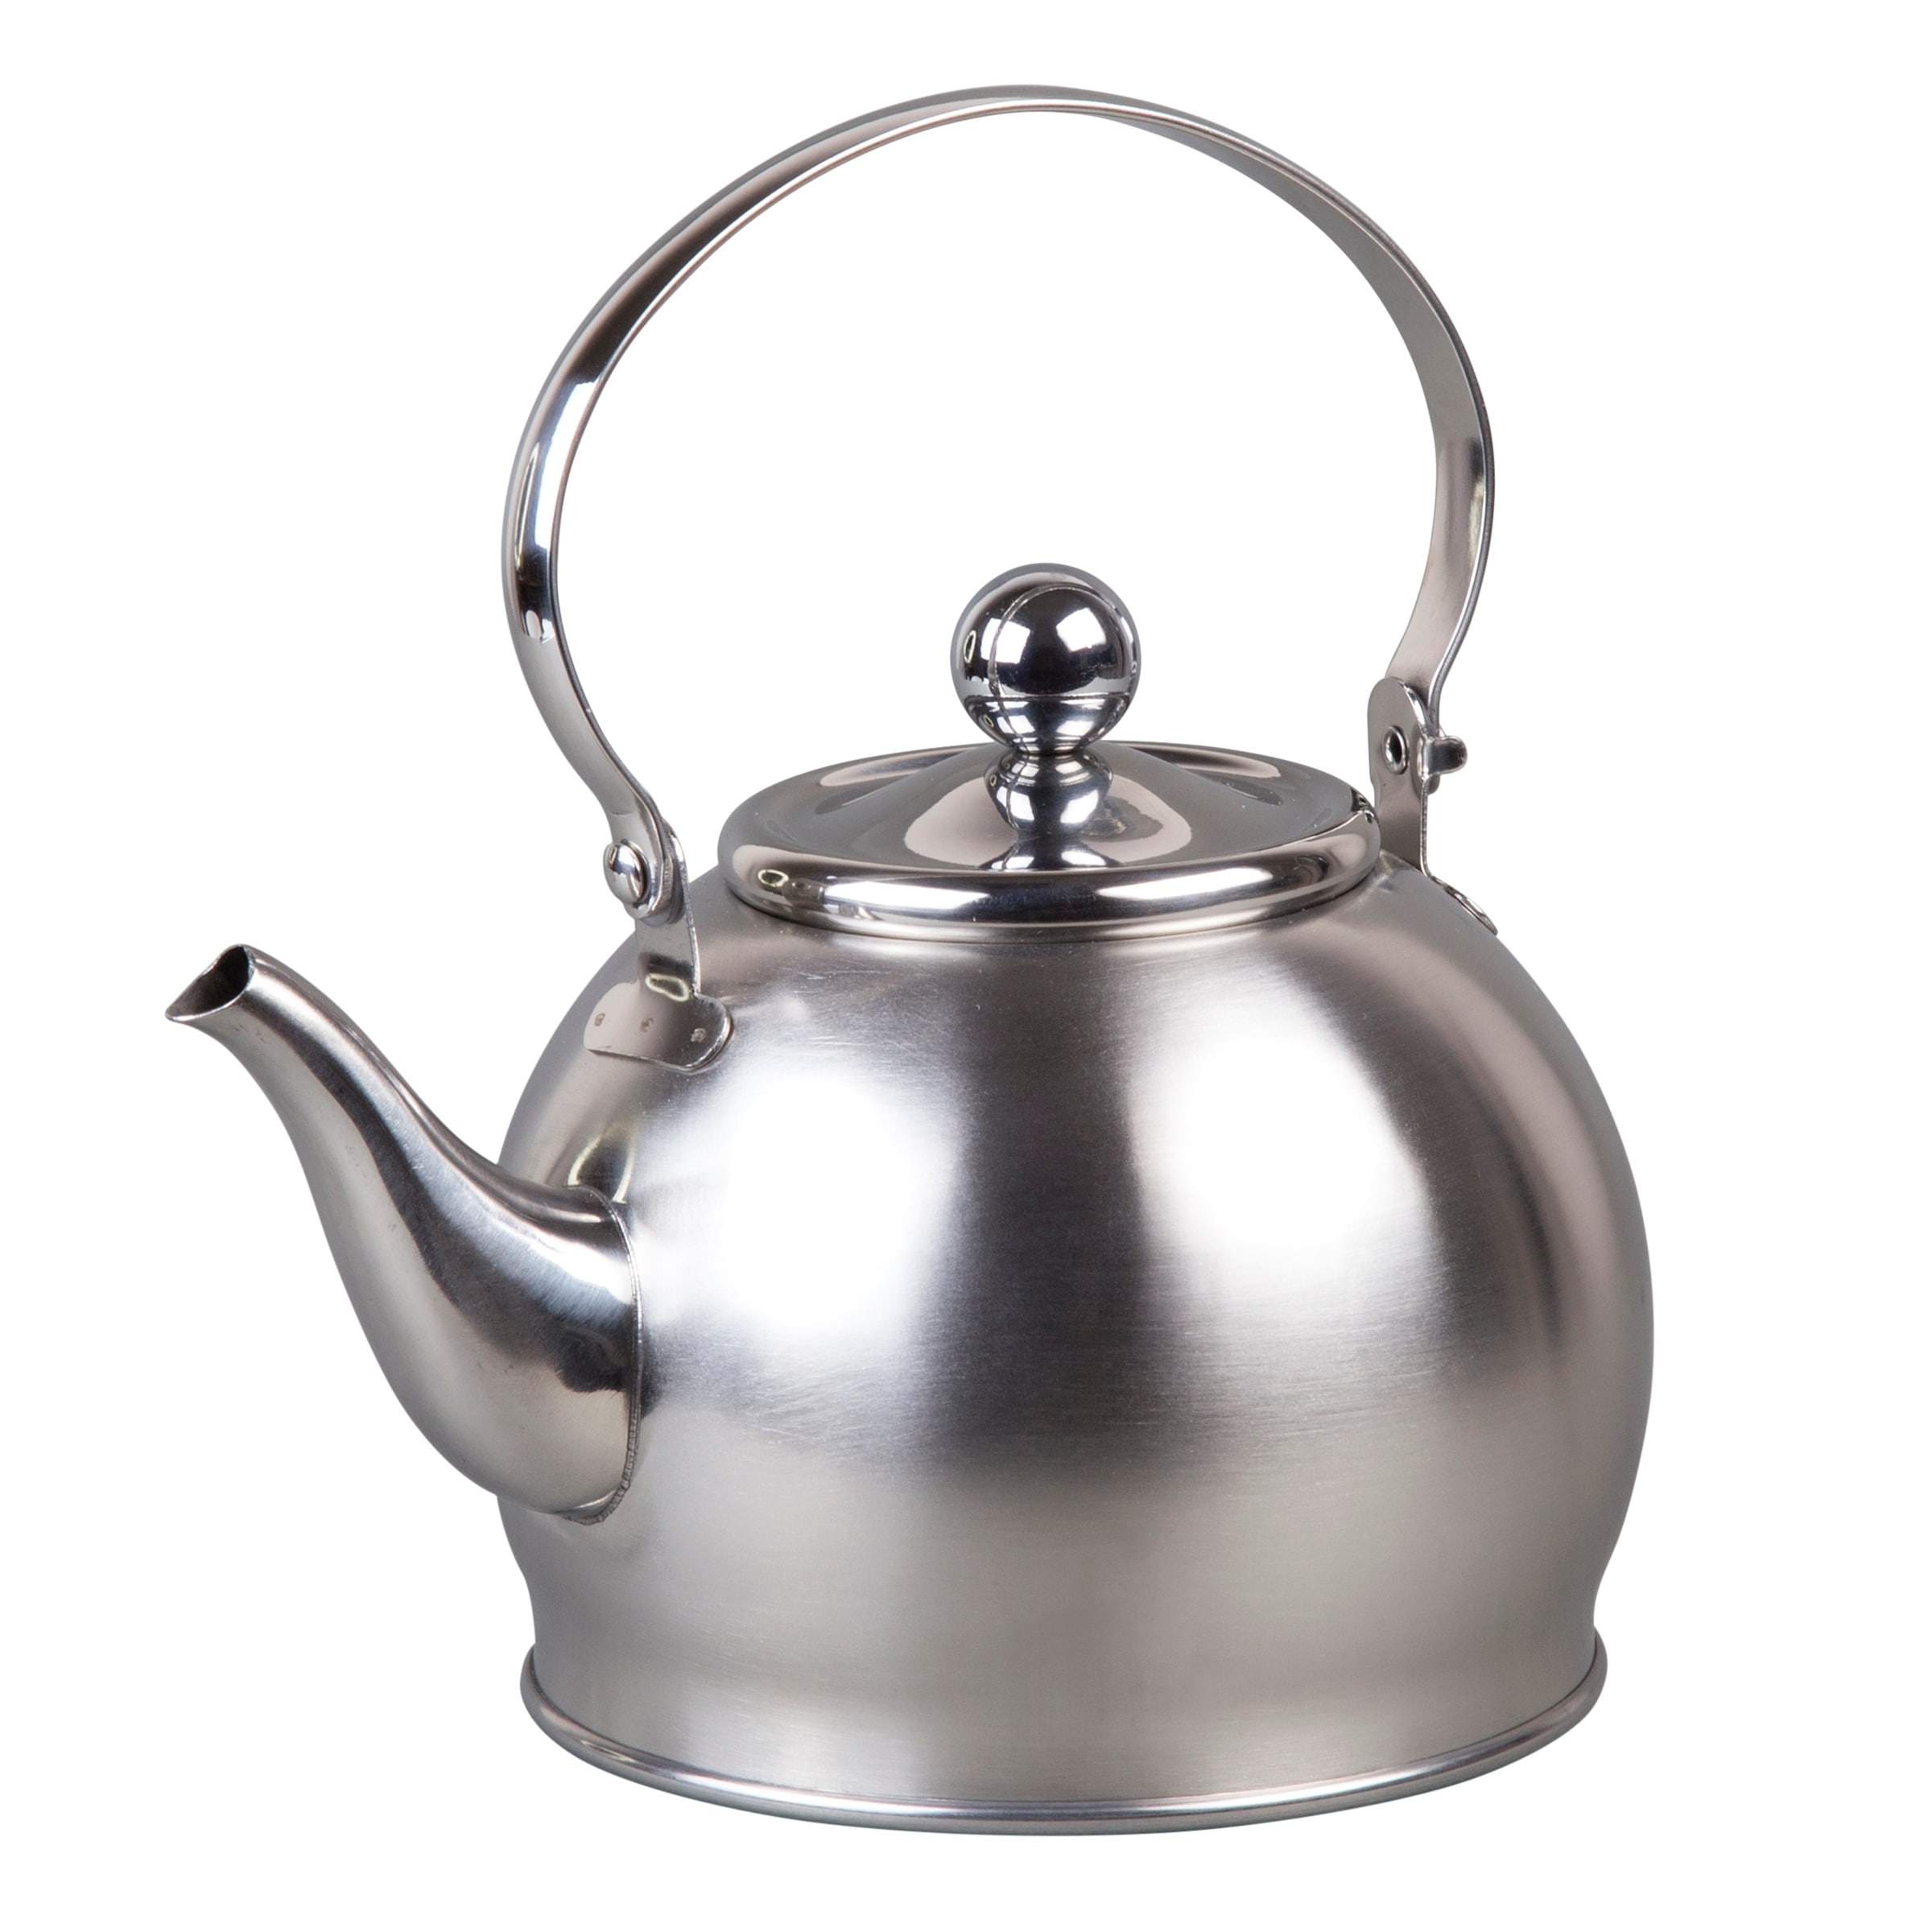 tea kettle